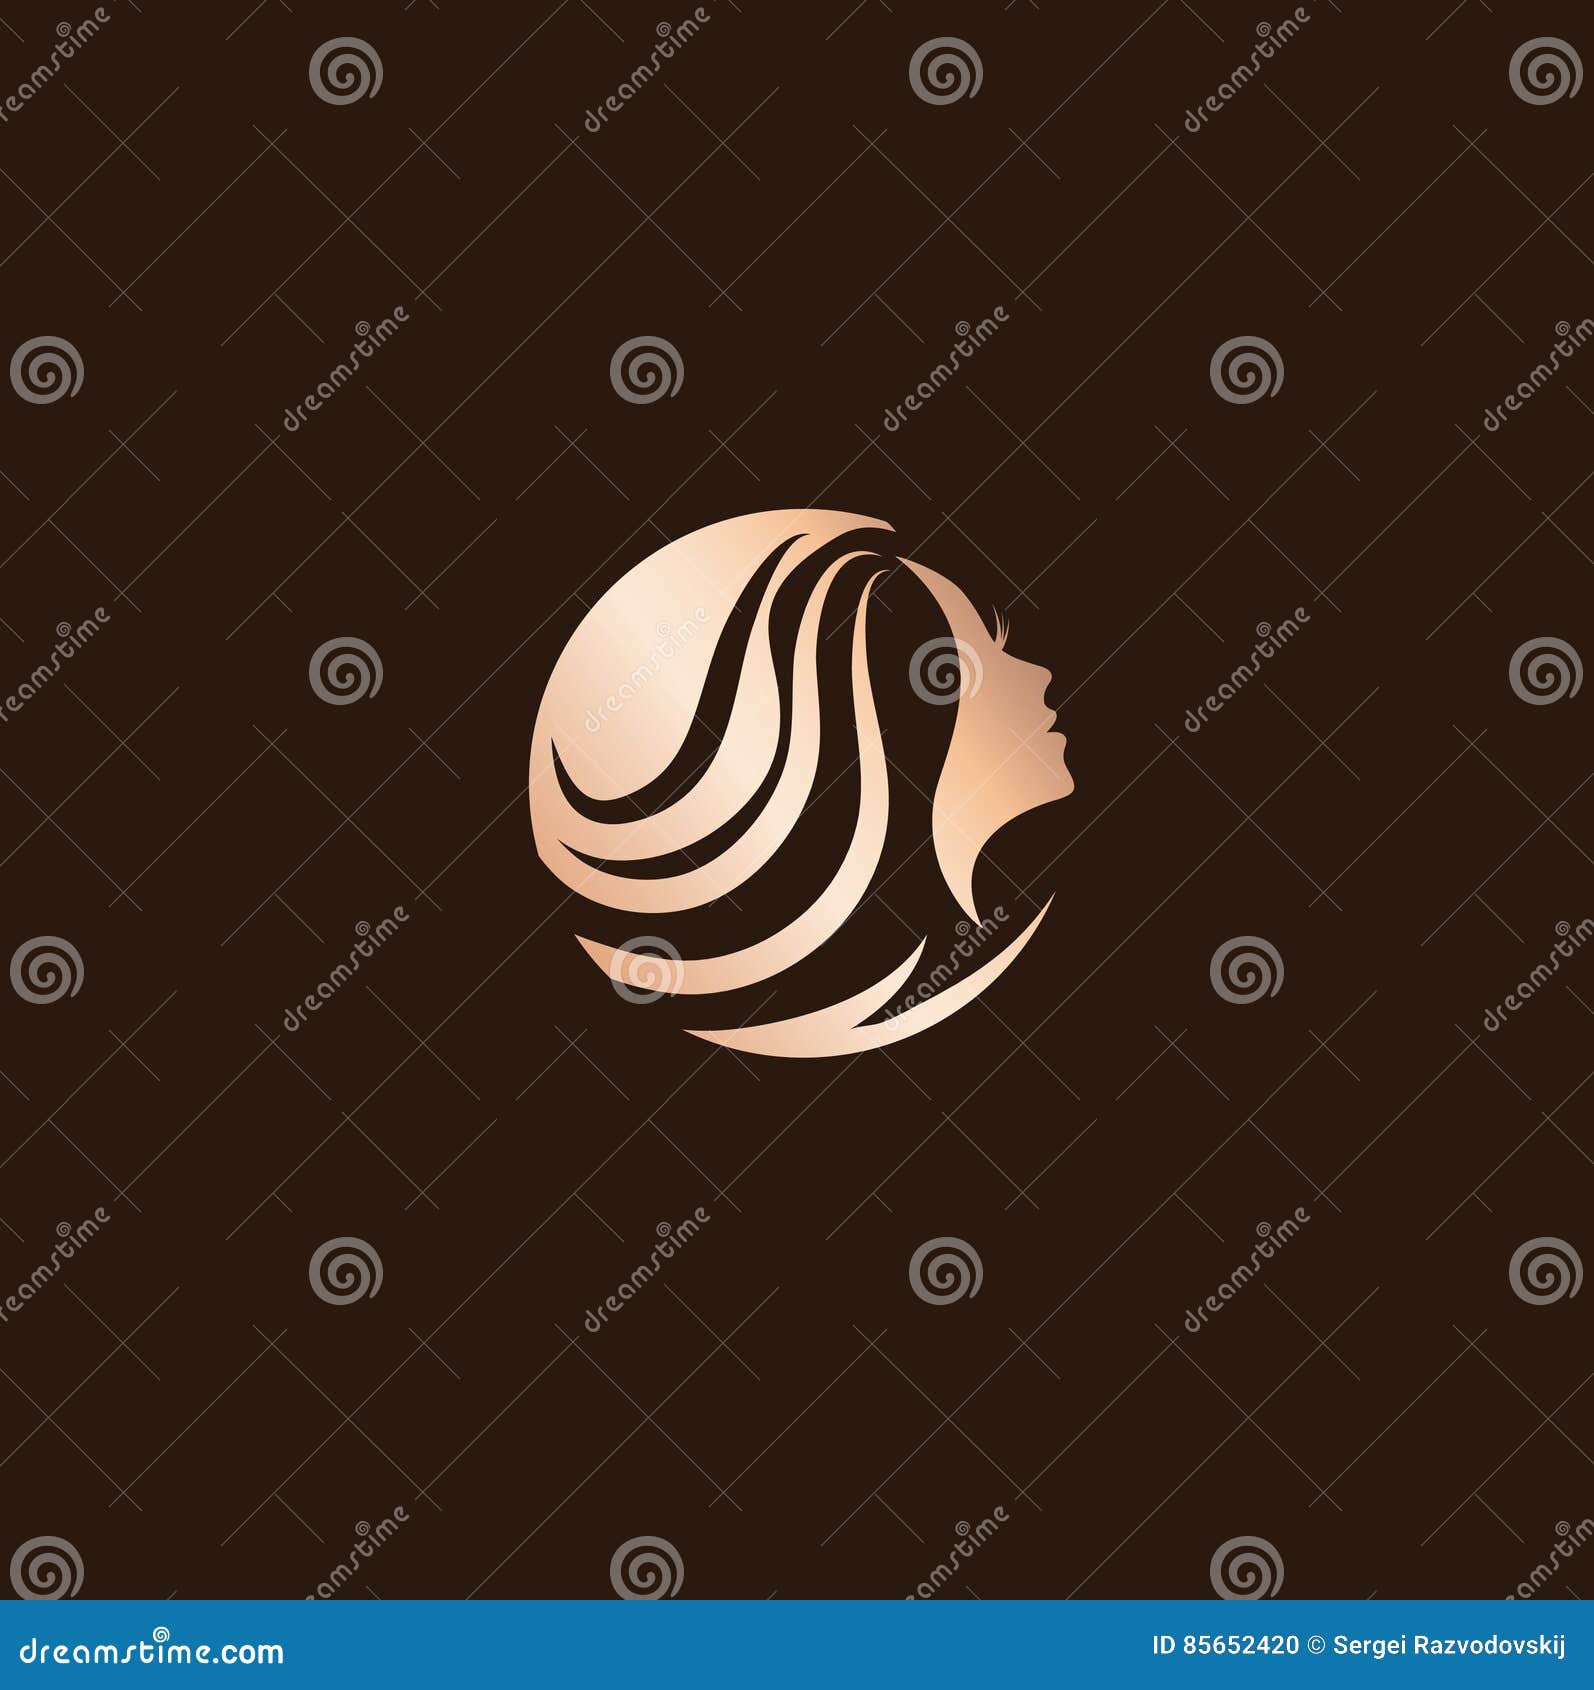 woman beauty hair salon logo 